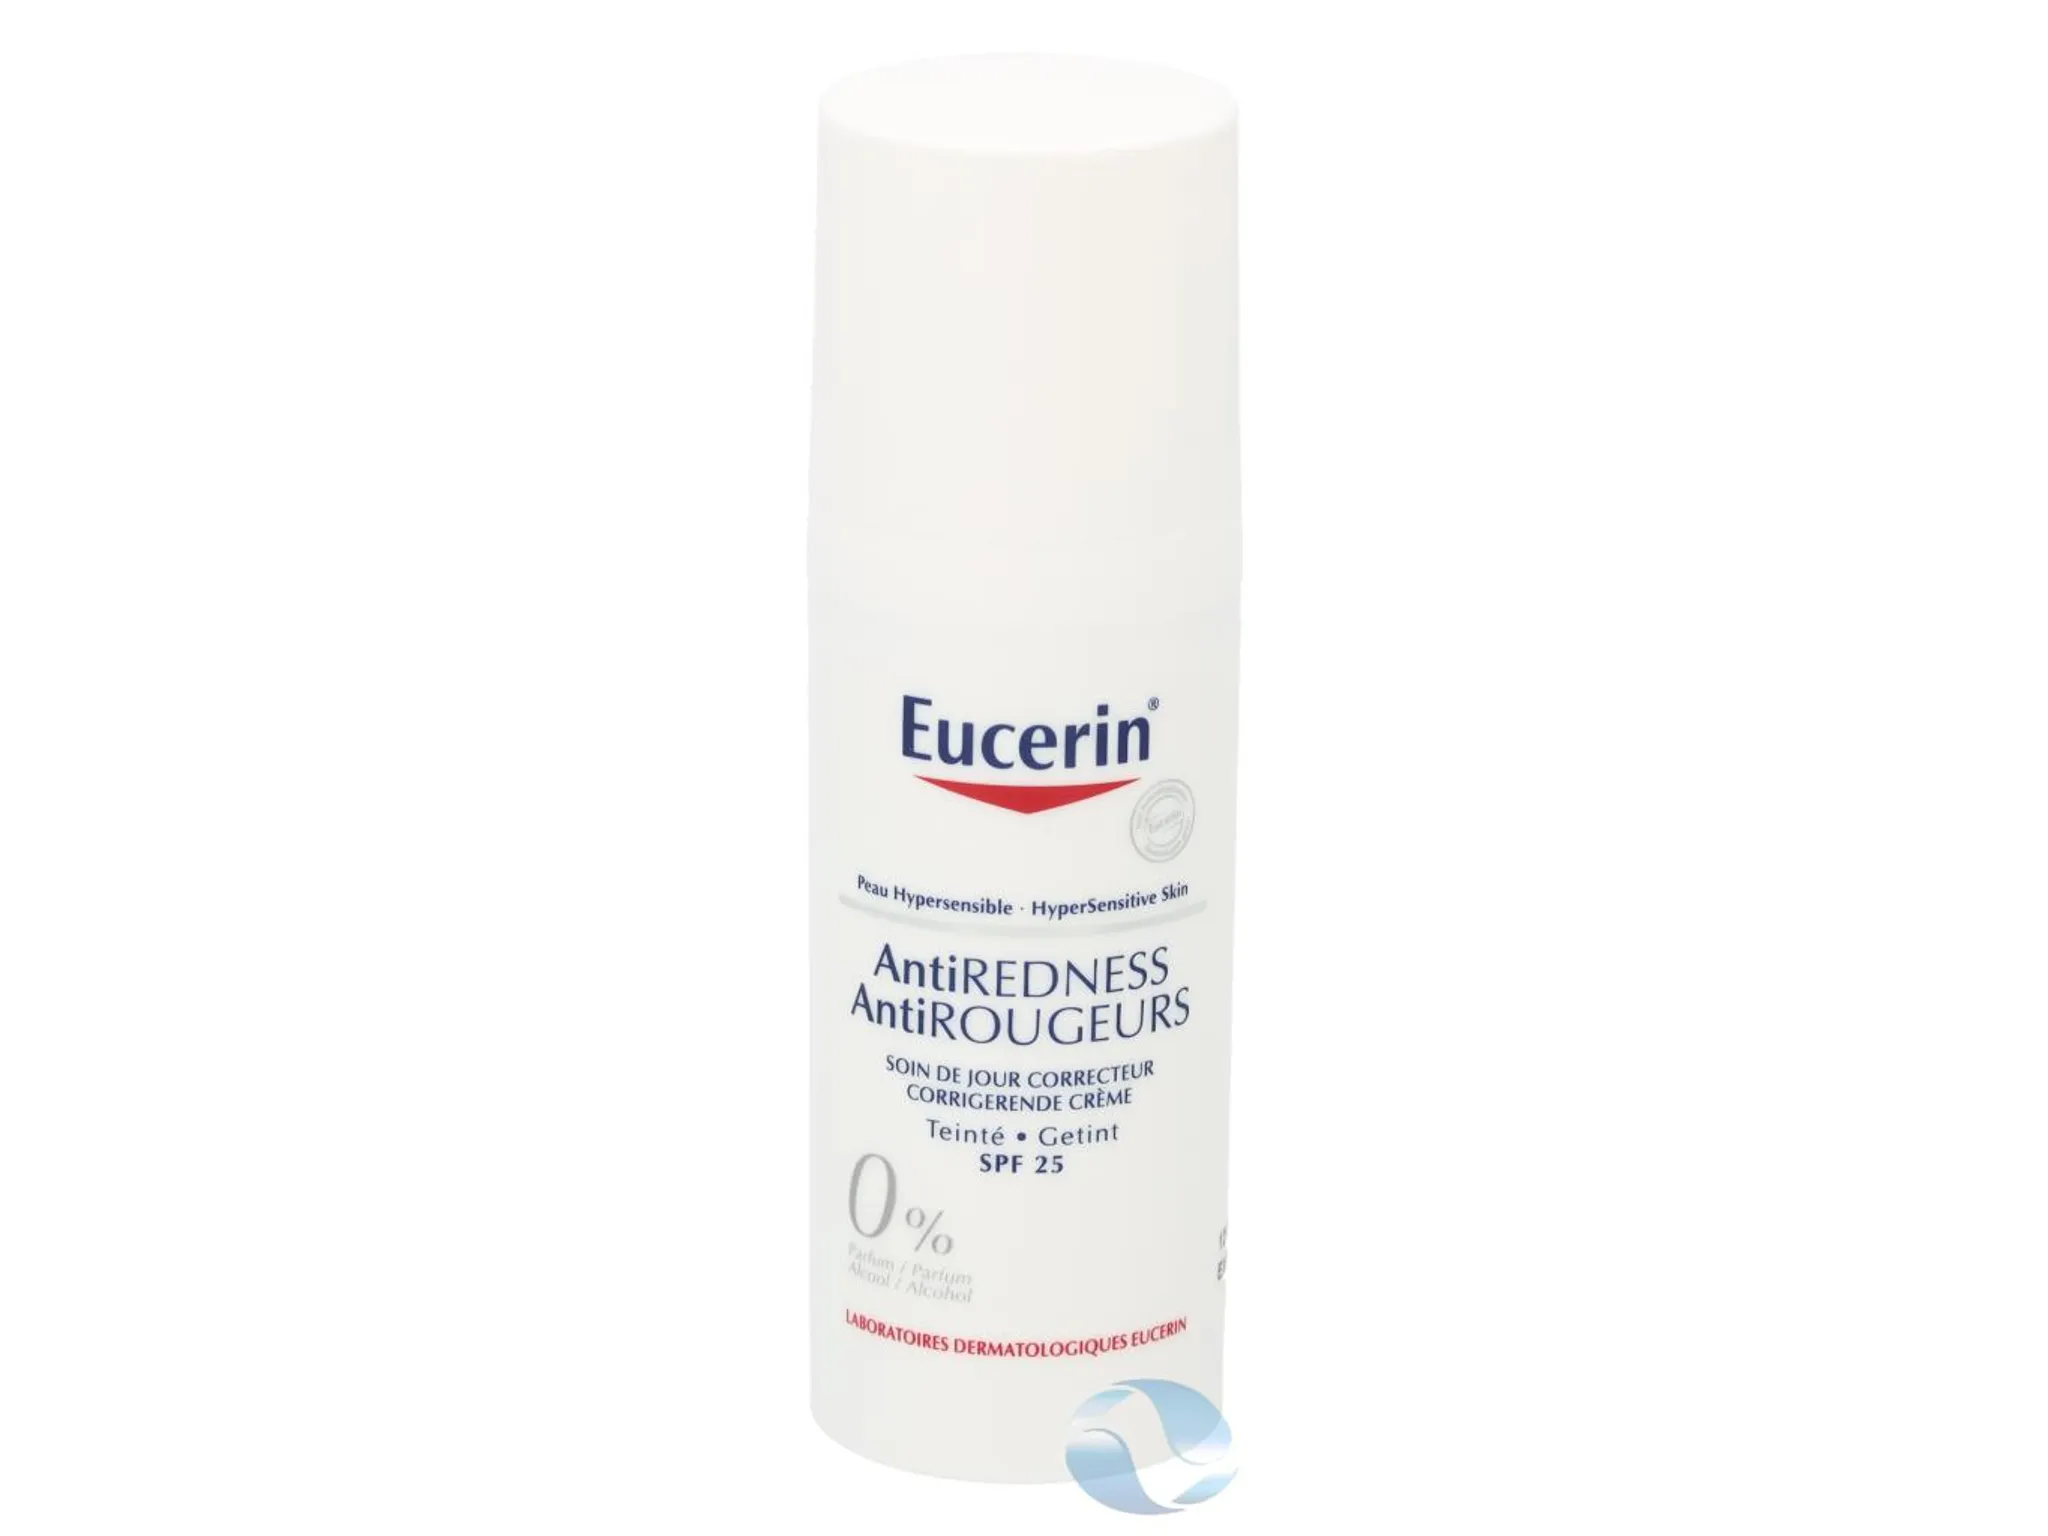 Day Correcting Cream Anti-Redness Eucerin